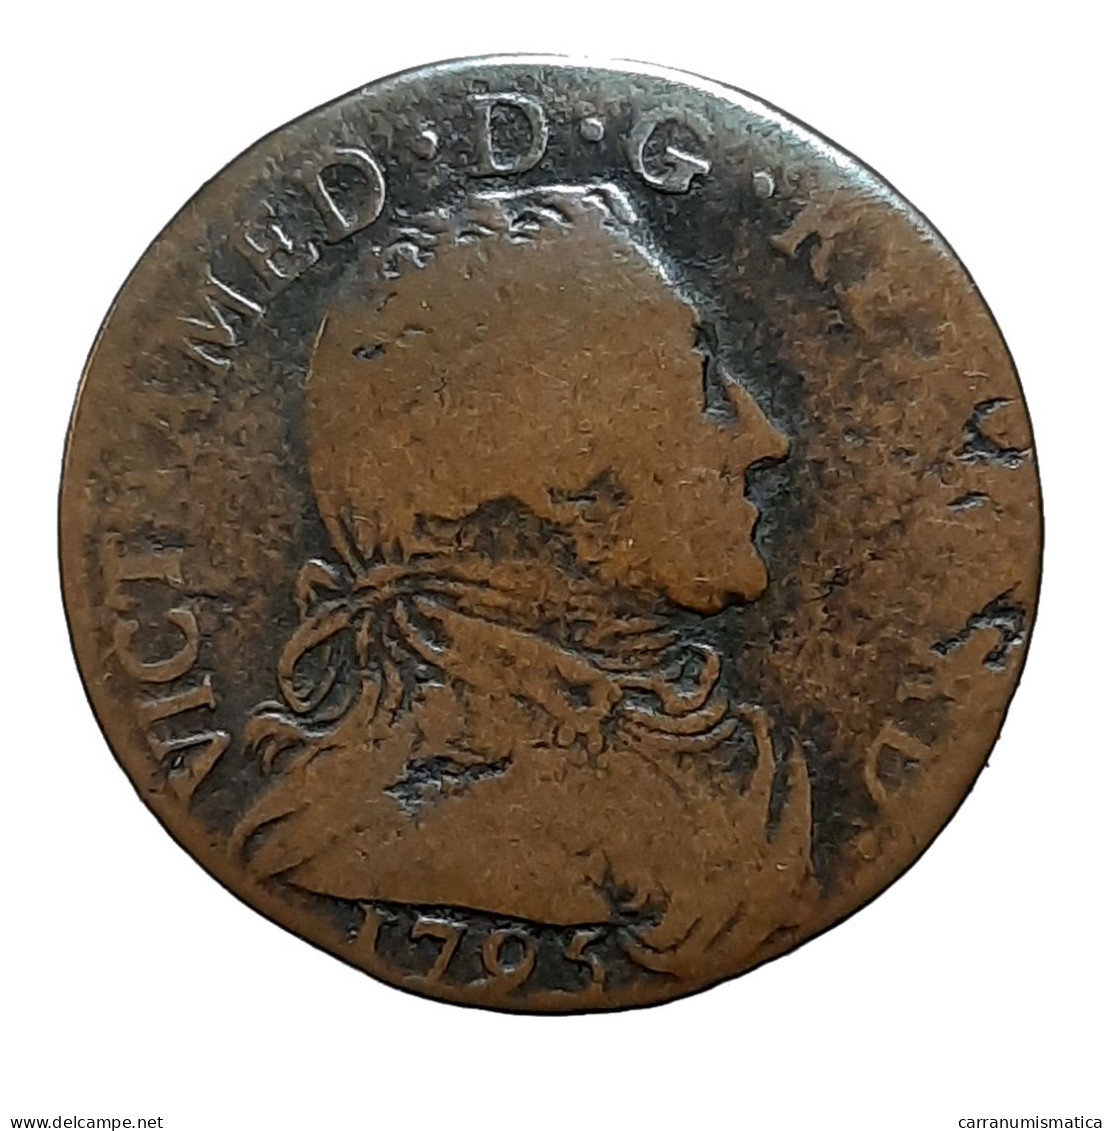 [NC] VITTORIO AMEDEO III - SAVOIA - 5 SOLDI 1795 (nc9229) - Italian Piedmont-Sardinia-Savoie